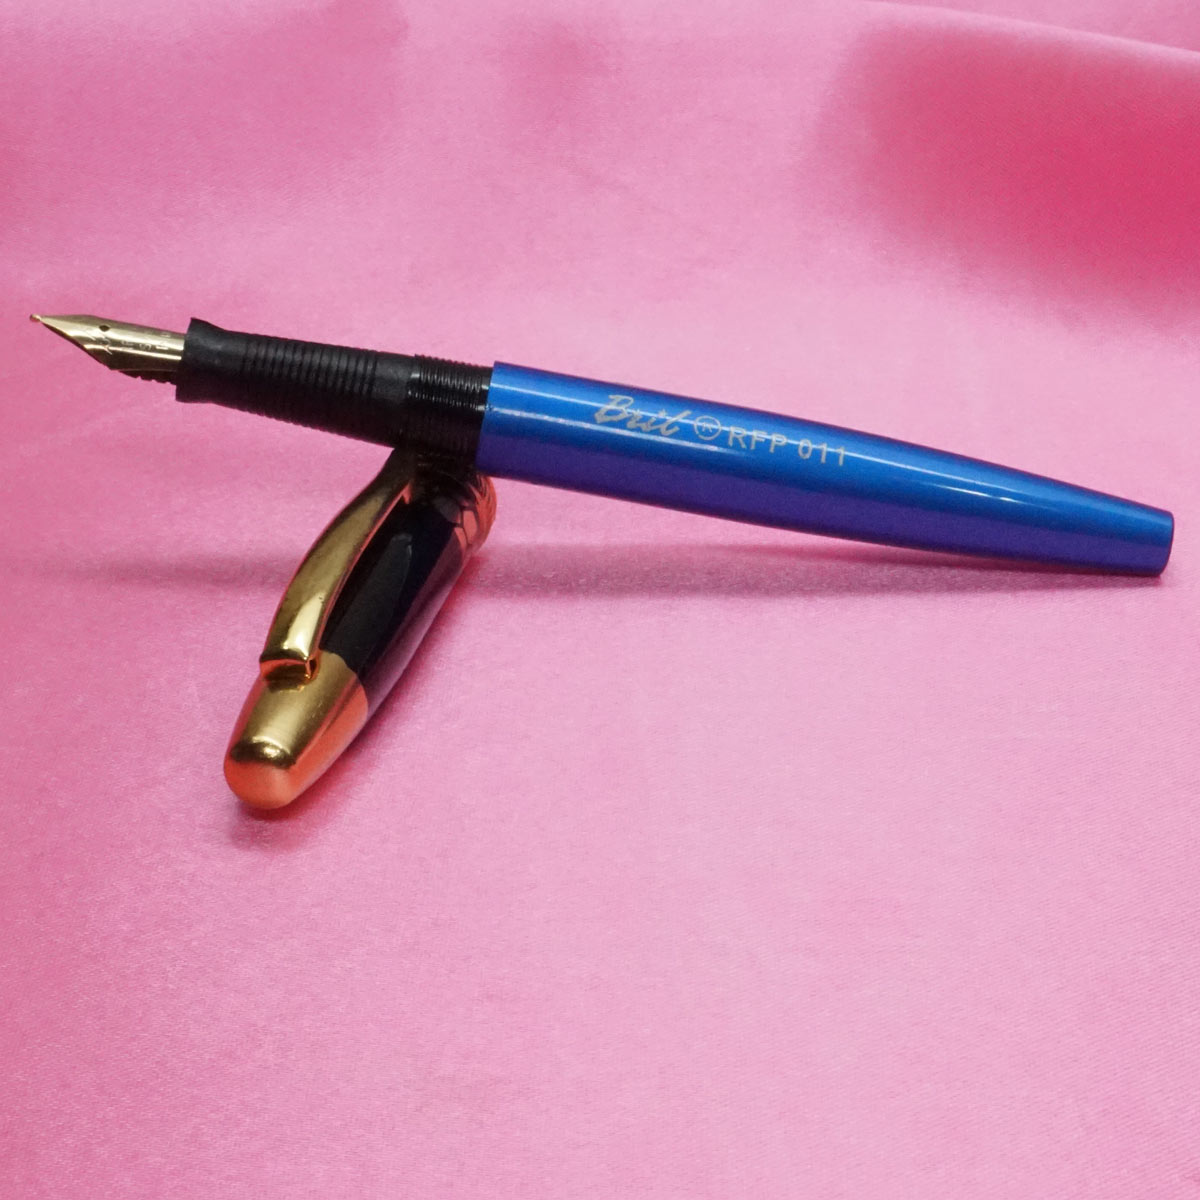 Bril 011 Blue Color Body Black Cap with No.5 GP Fine Tipped Eye Dropper Model Fountain Pen SKU 20908